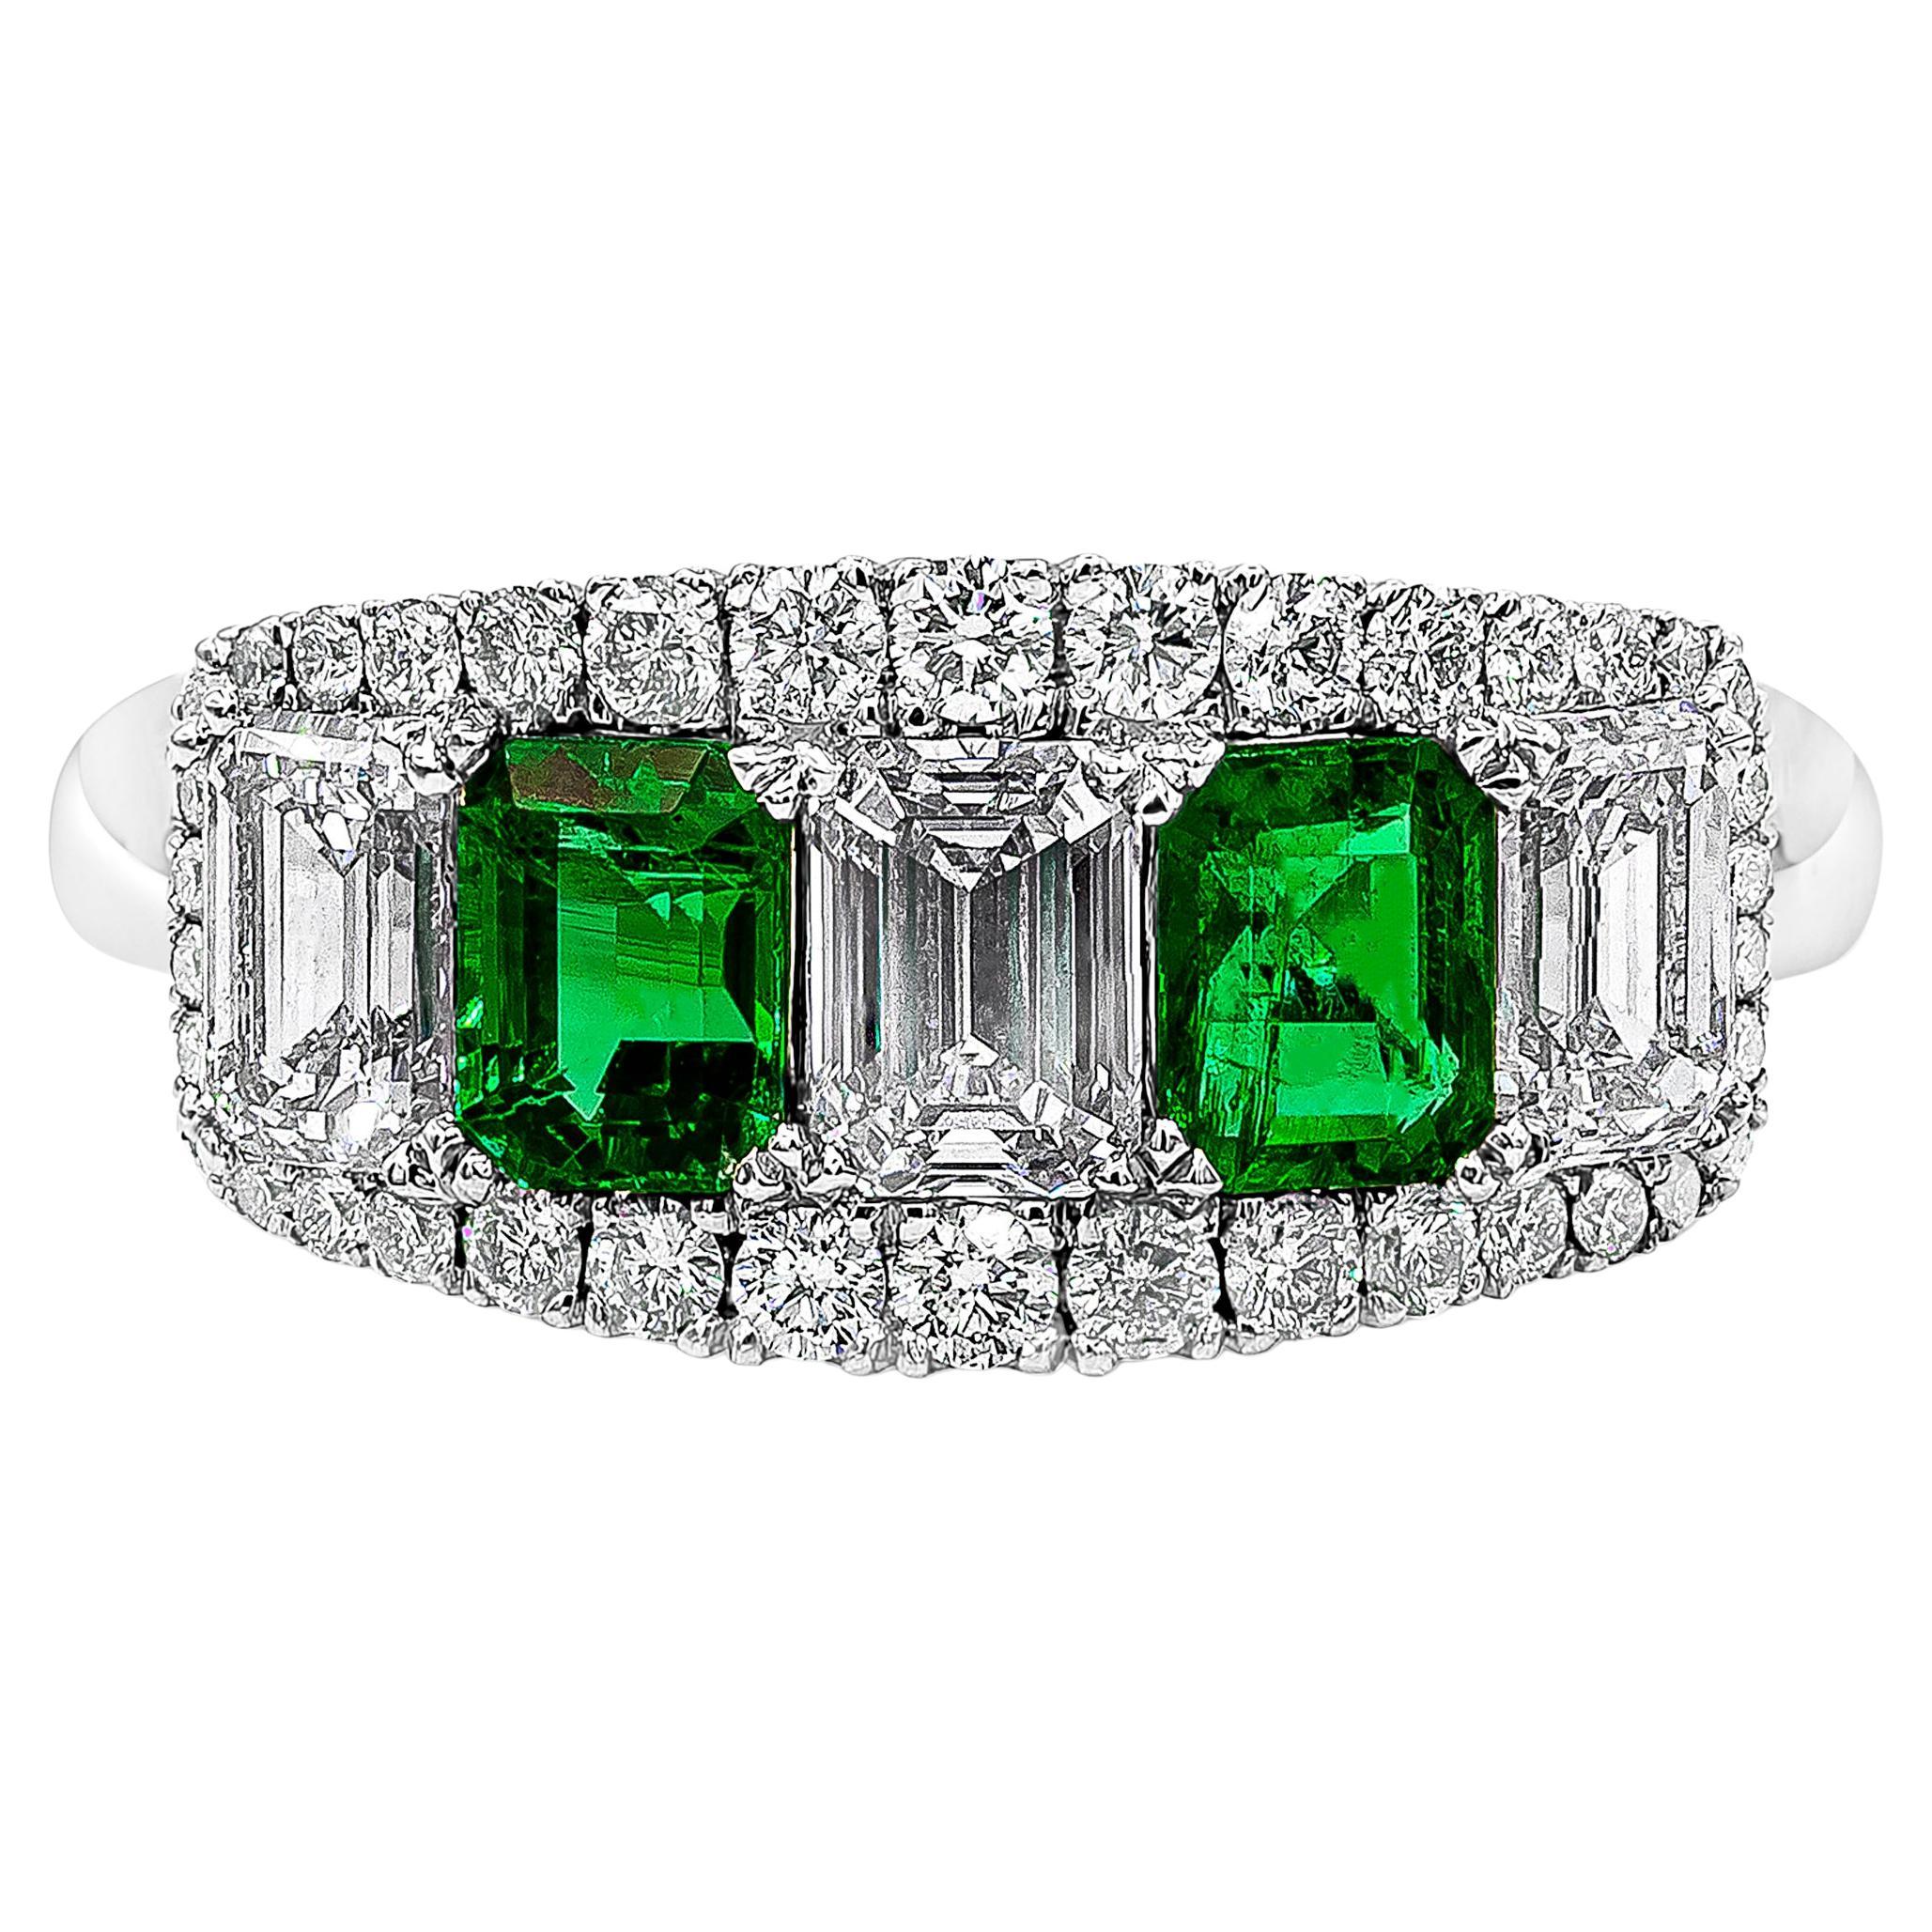 2.35 Carats Total Emerald Cut Green Emerald and Diamond Five-Stone Fashion Ring